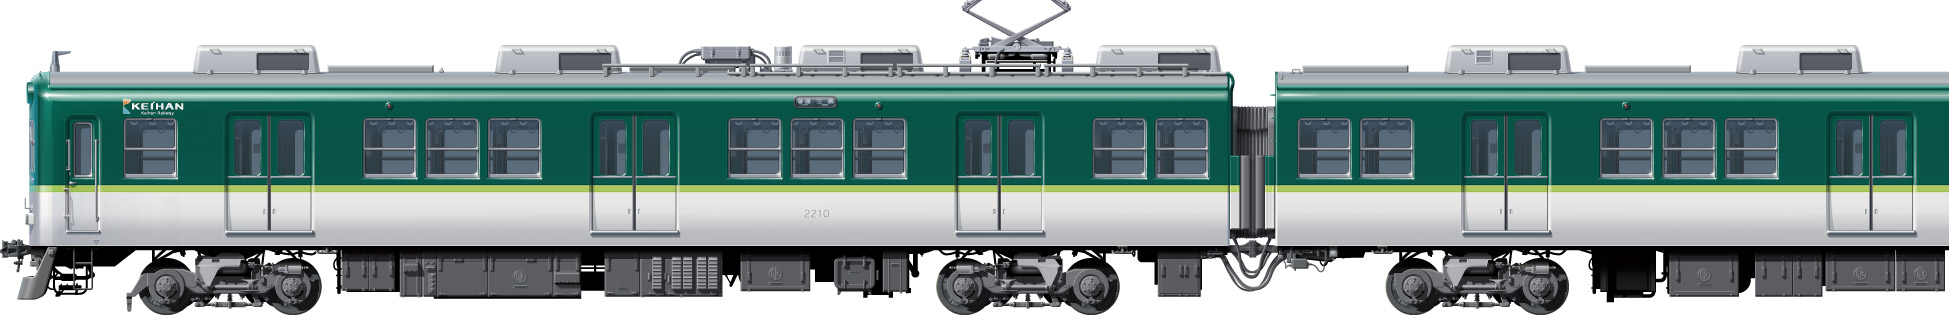 2200n@ʃCXg@ʃCXg@tgr[CXg@TChr[CXg@CXg@dS keihan Railway illustration  front view@sideview front view